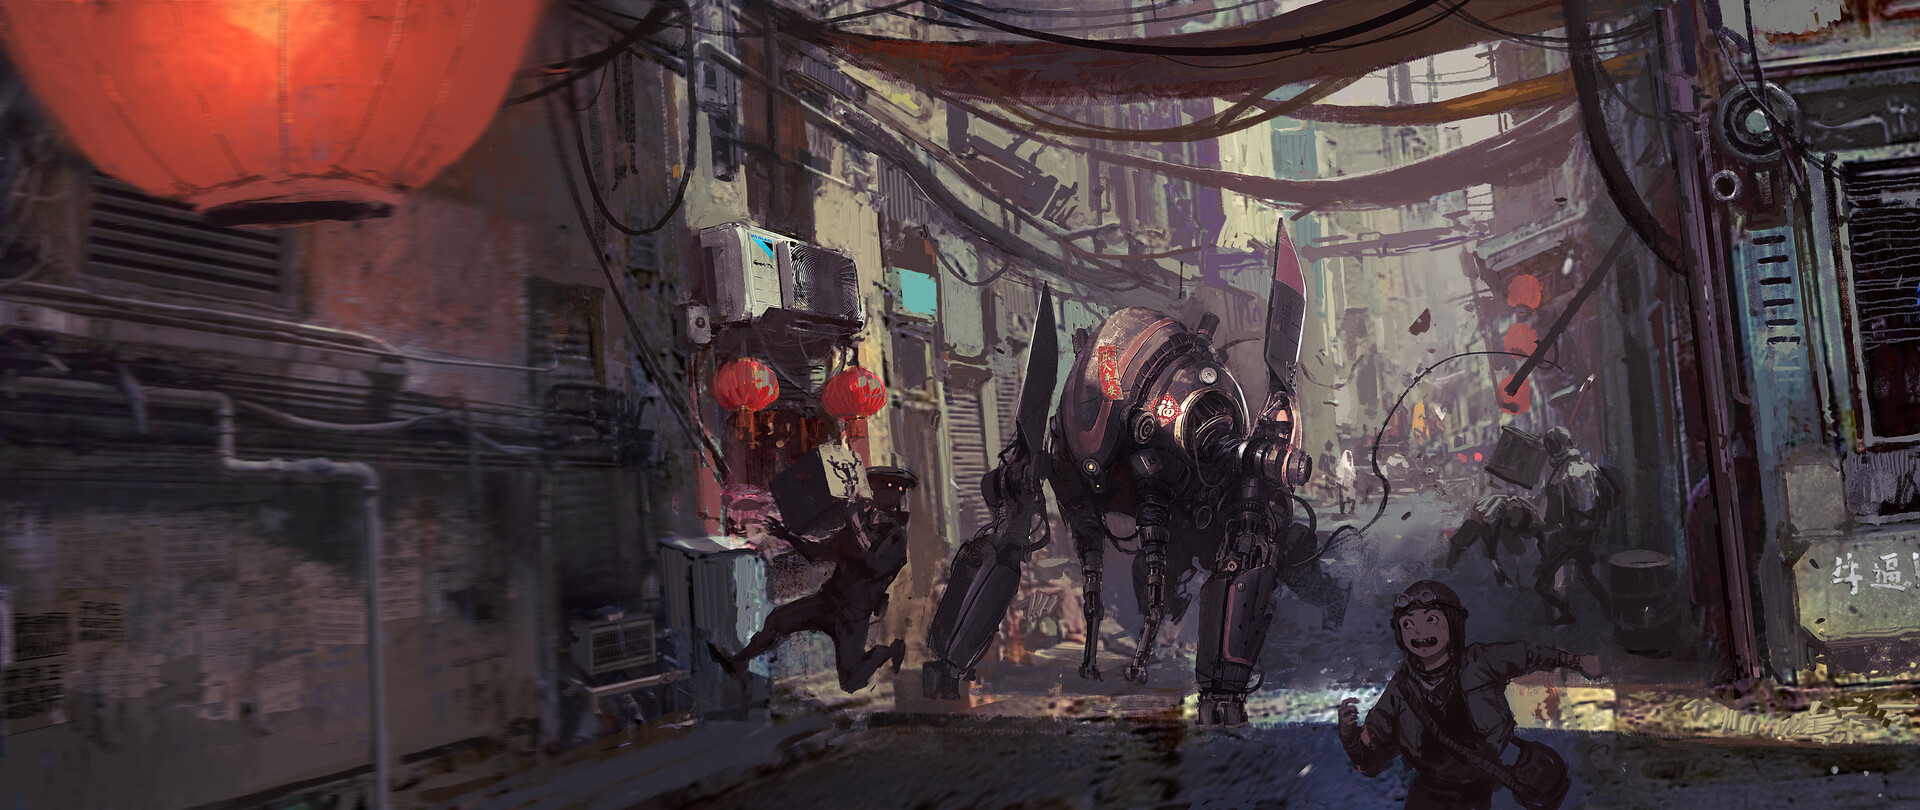 General 1920x810 su jian robot digital art lantern chinese new year artwork futuristic alleyway cyberpunk